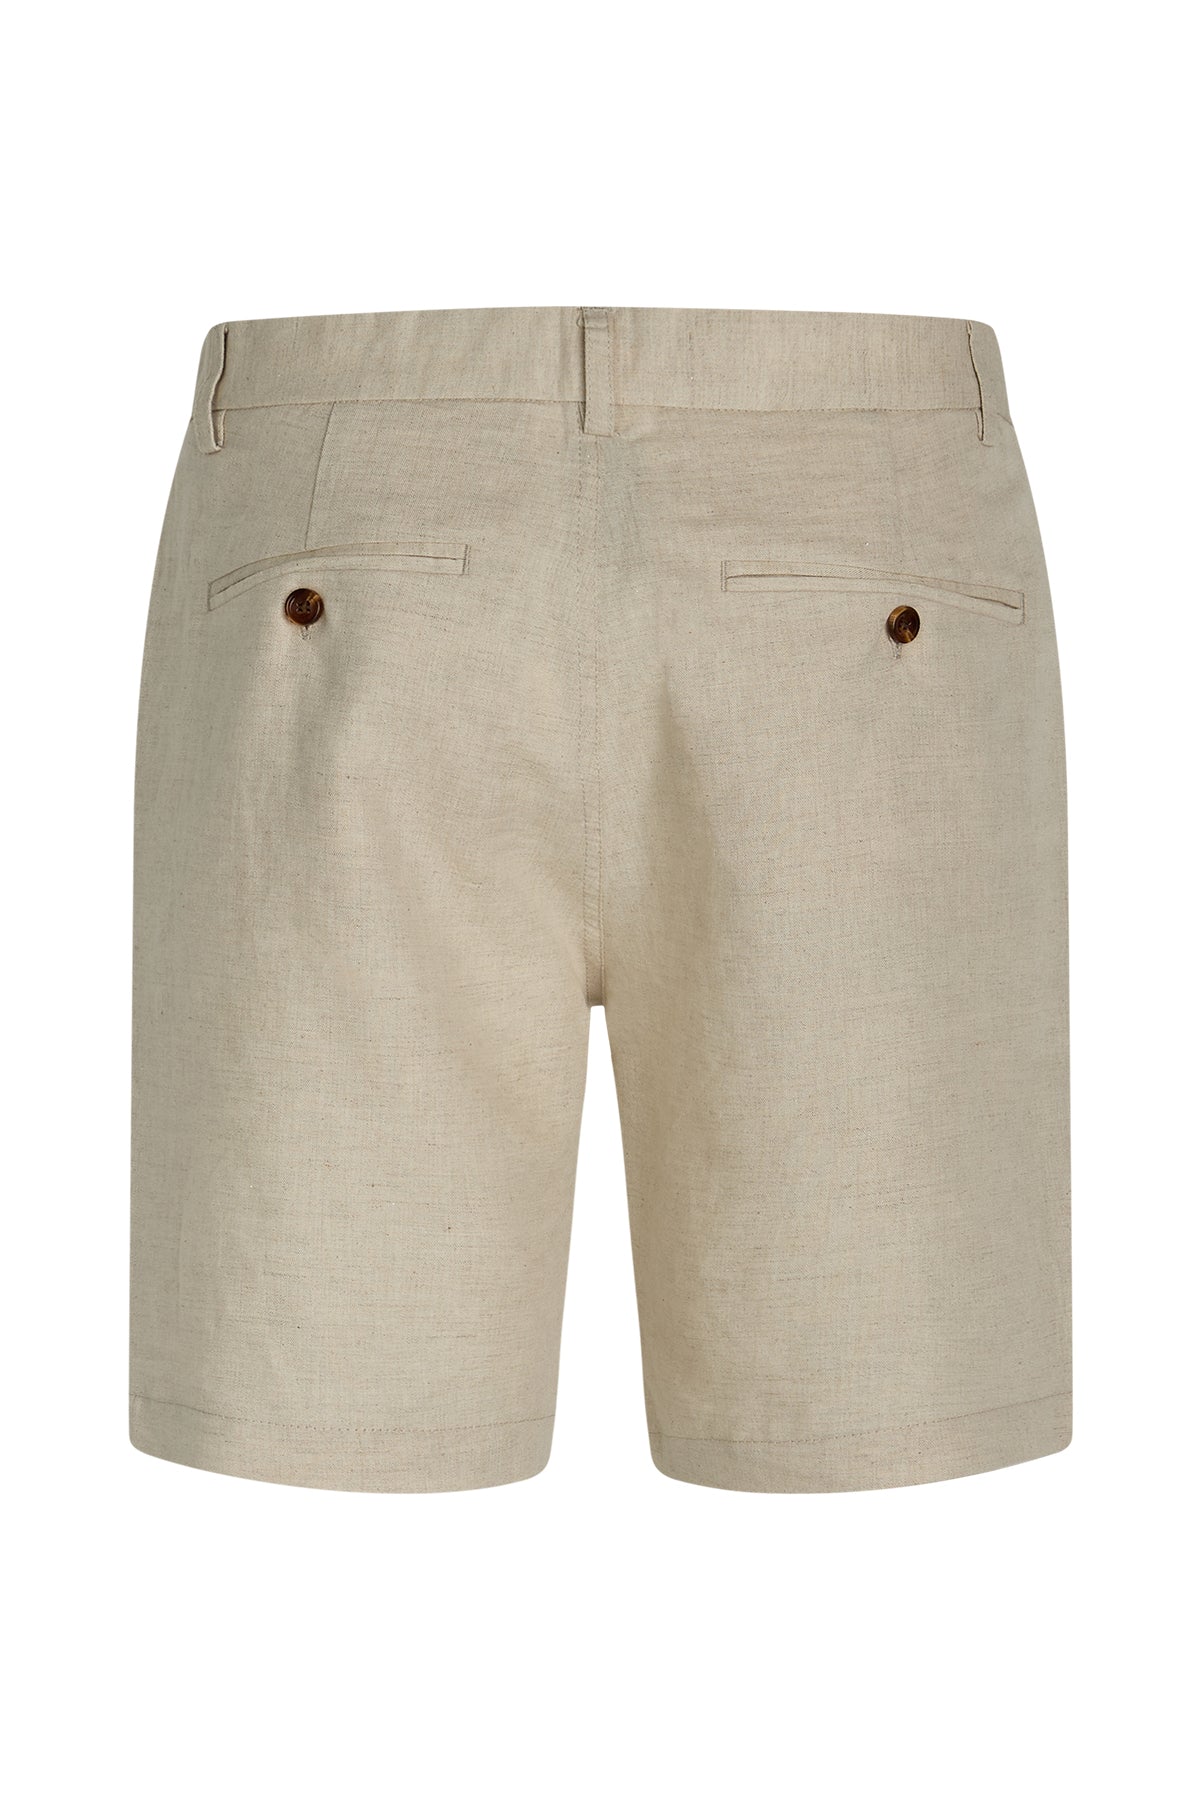 Bruuns Bazaar Men - Lino Germain shorts - Irish Cream